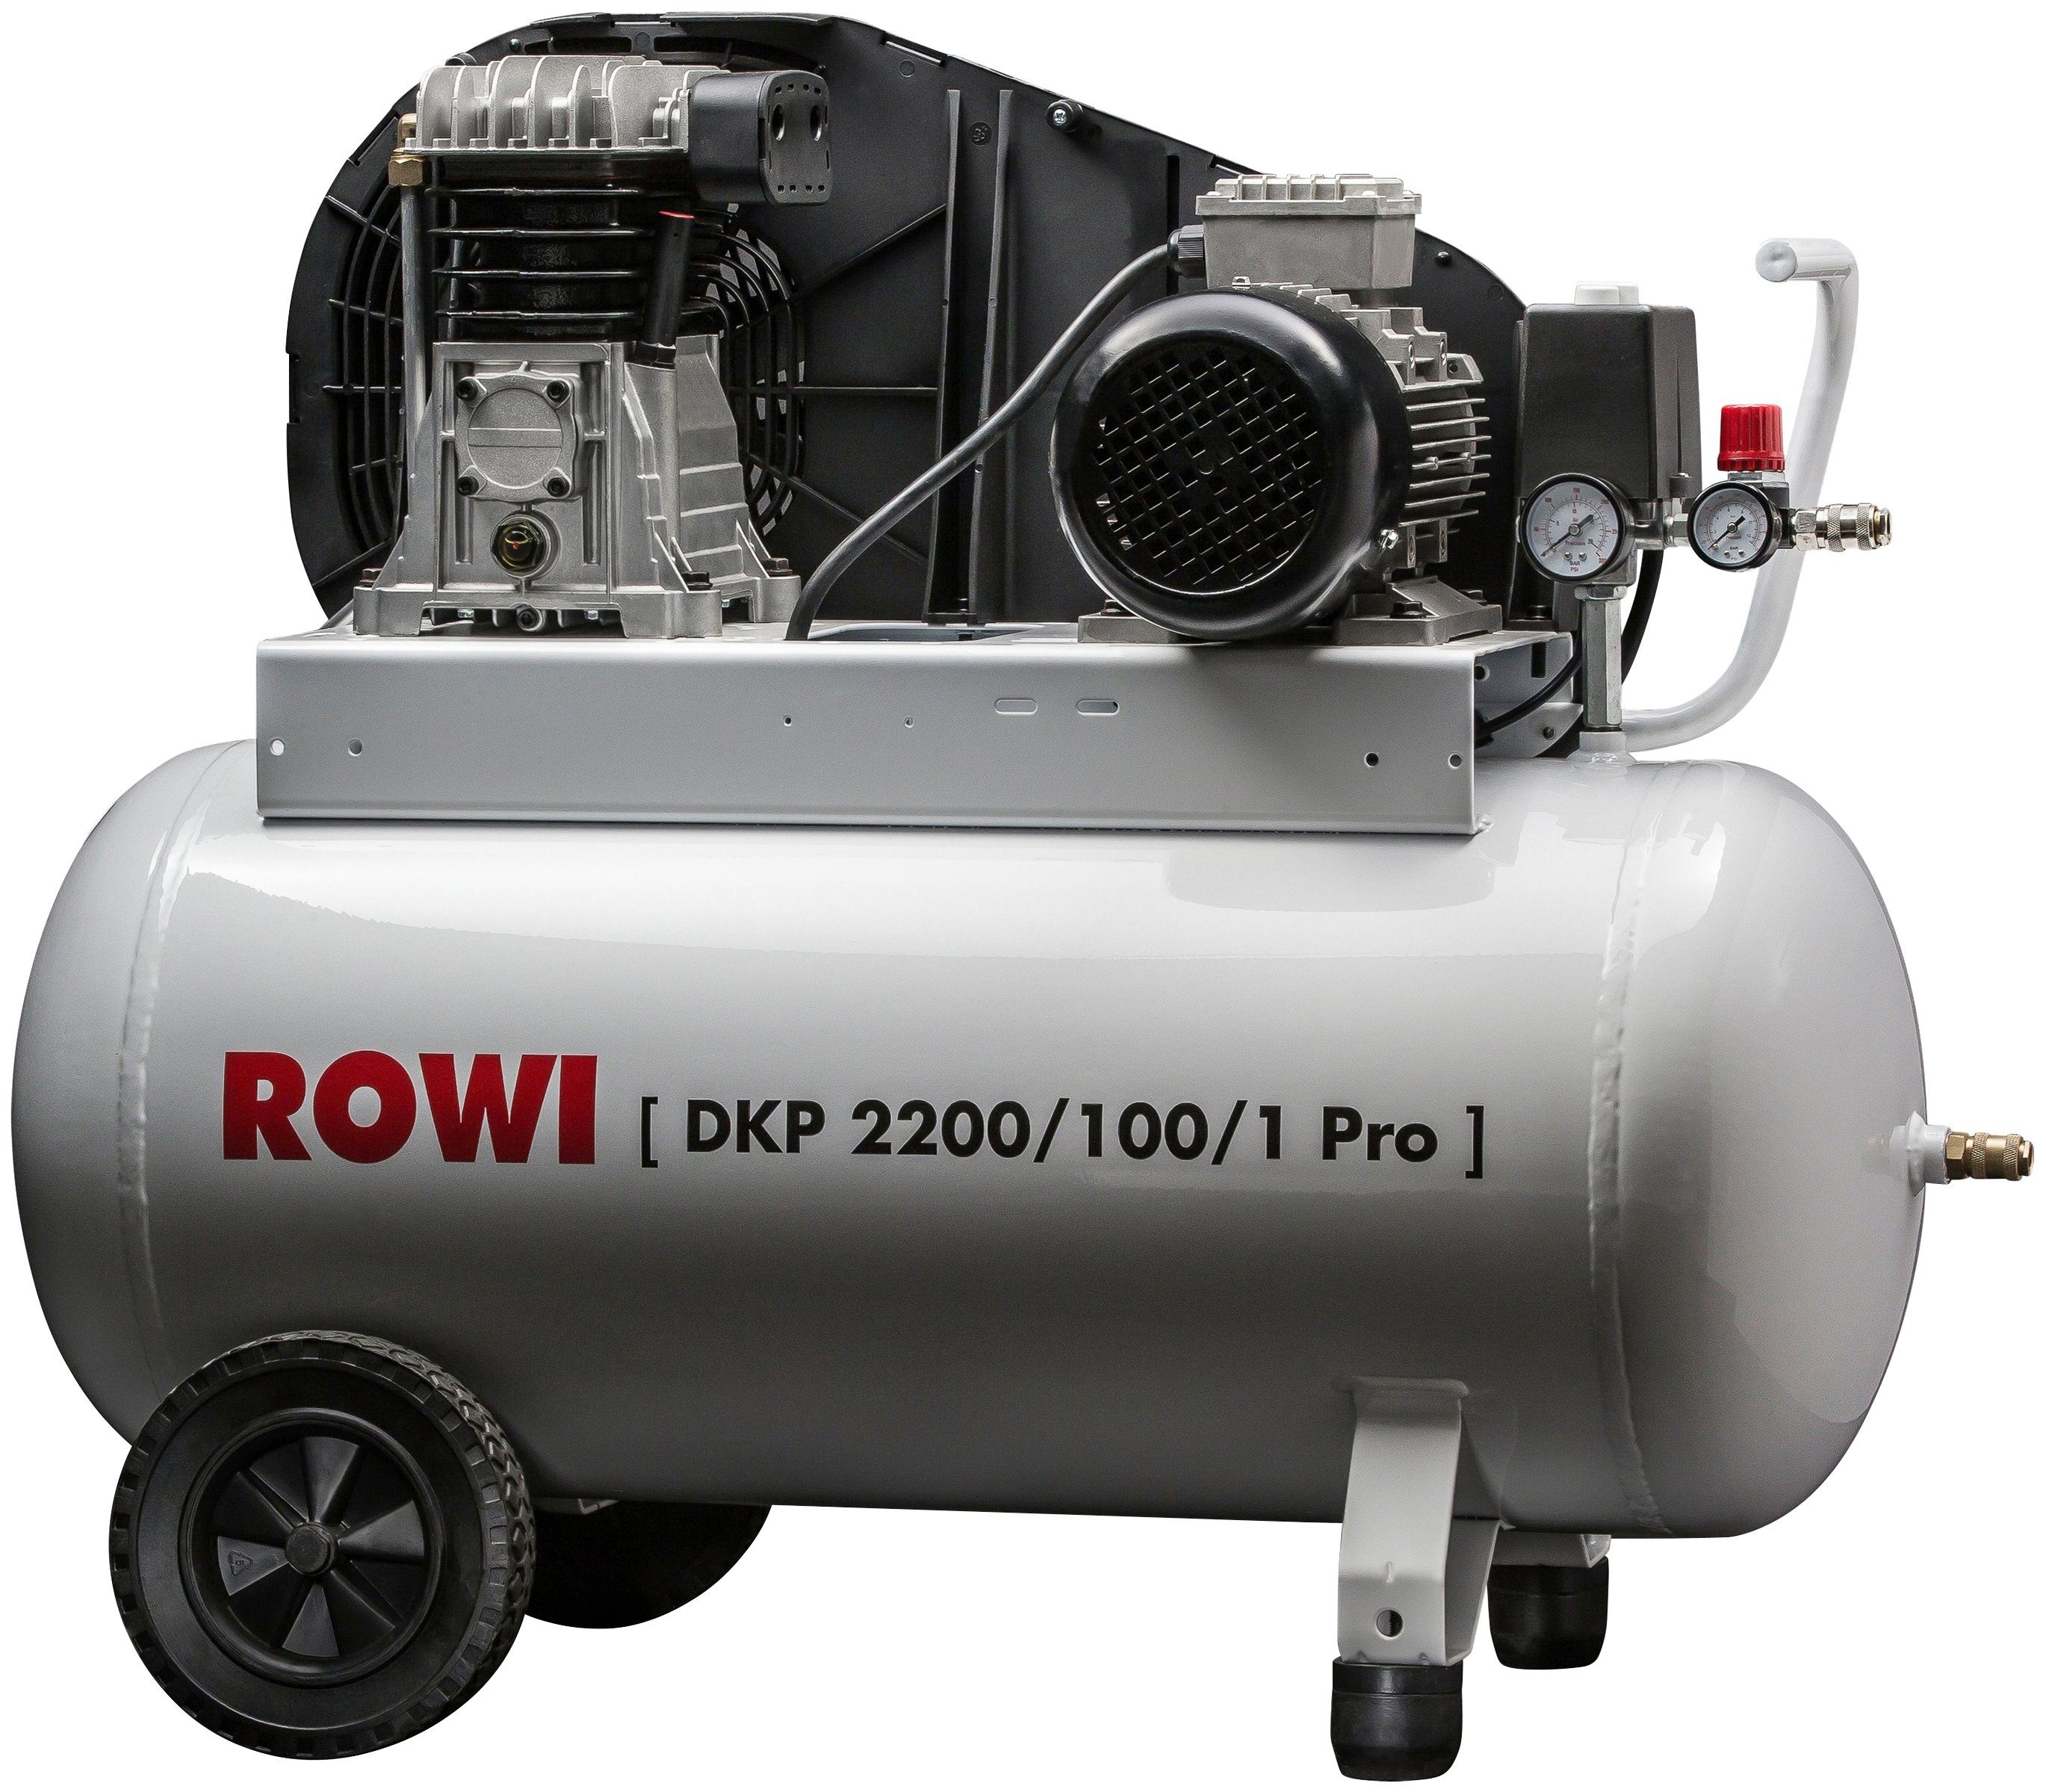 ROWI Kompressor DKP max. Pro, 2200/100/1 bar, 100 Packung l, 2200 W, 10